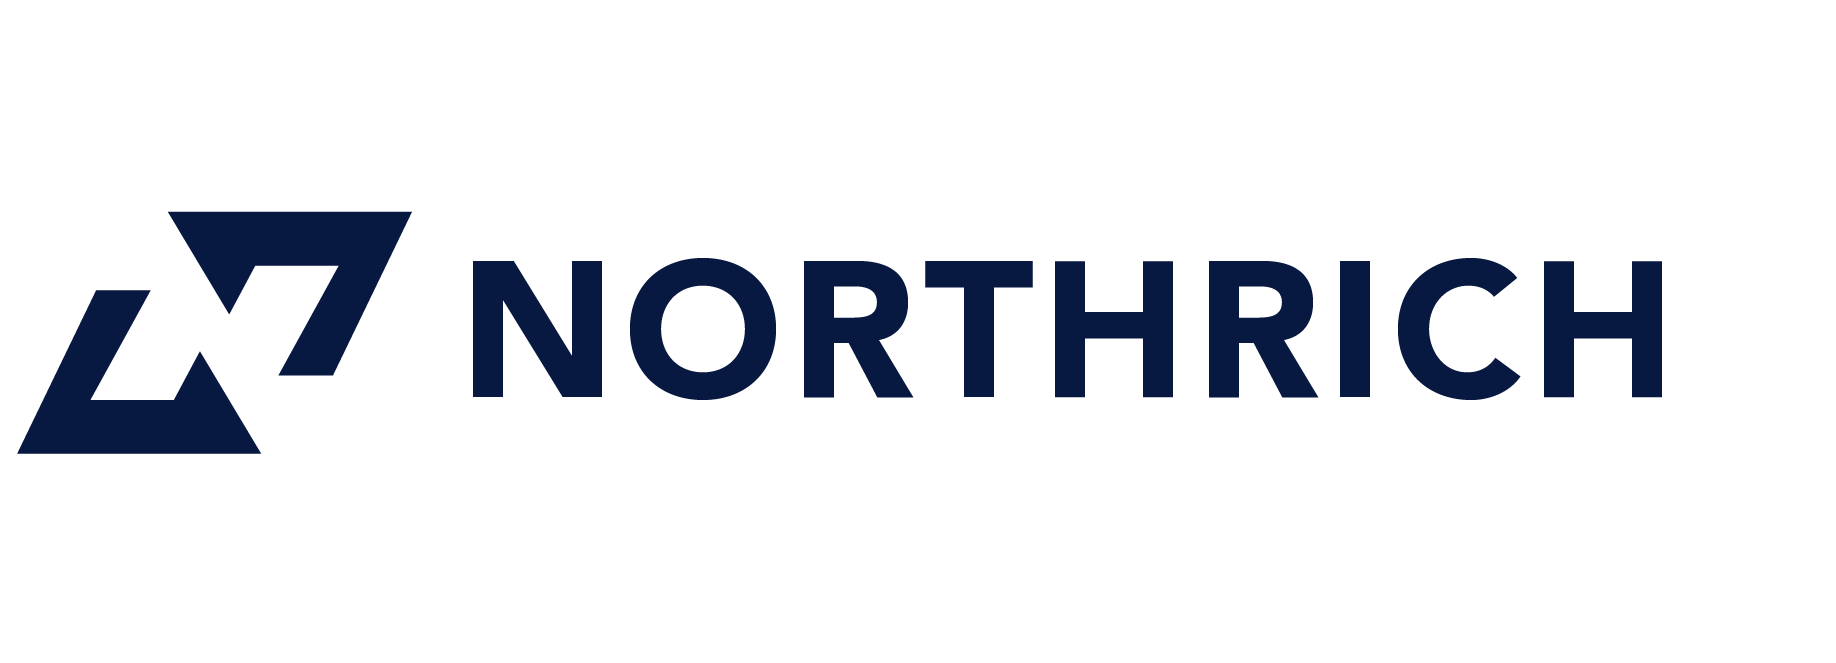 Northrich-seul-bleu-sans-fond-Horizontal (1)